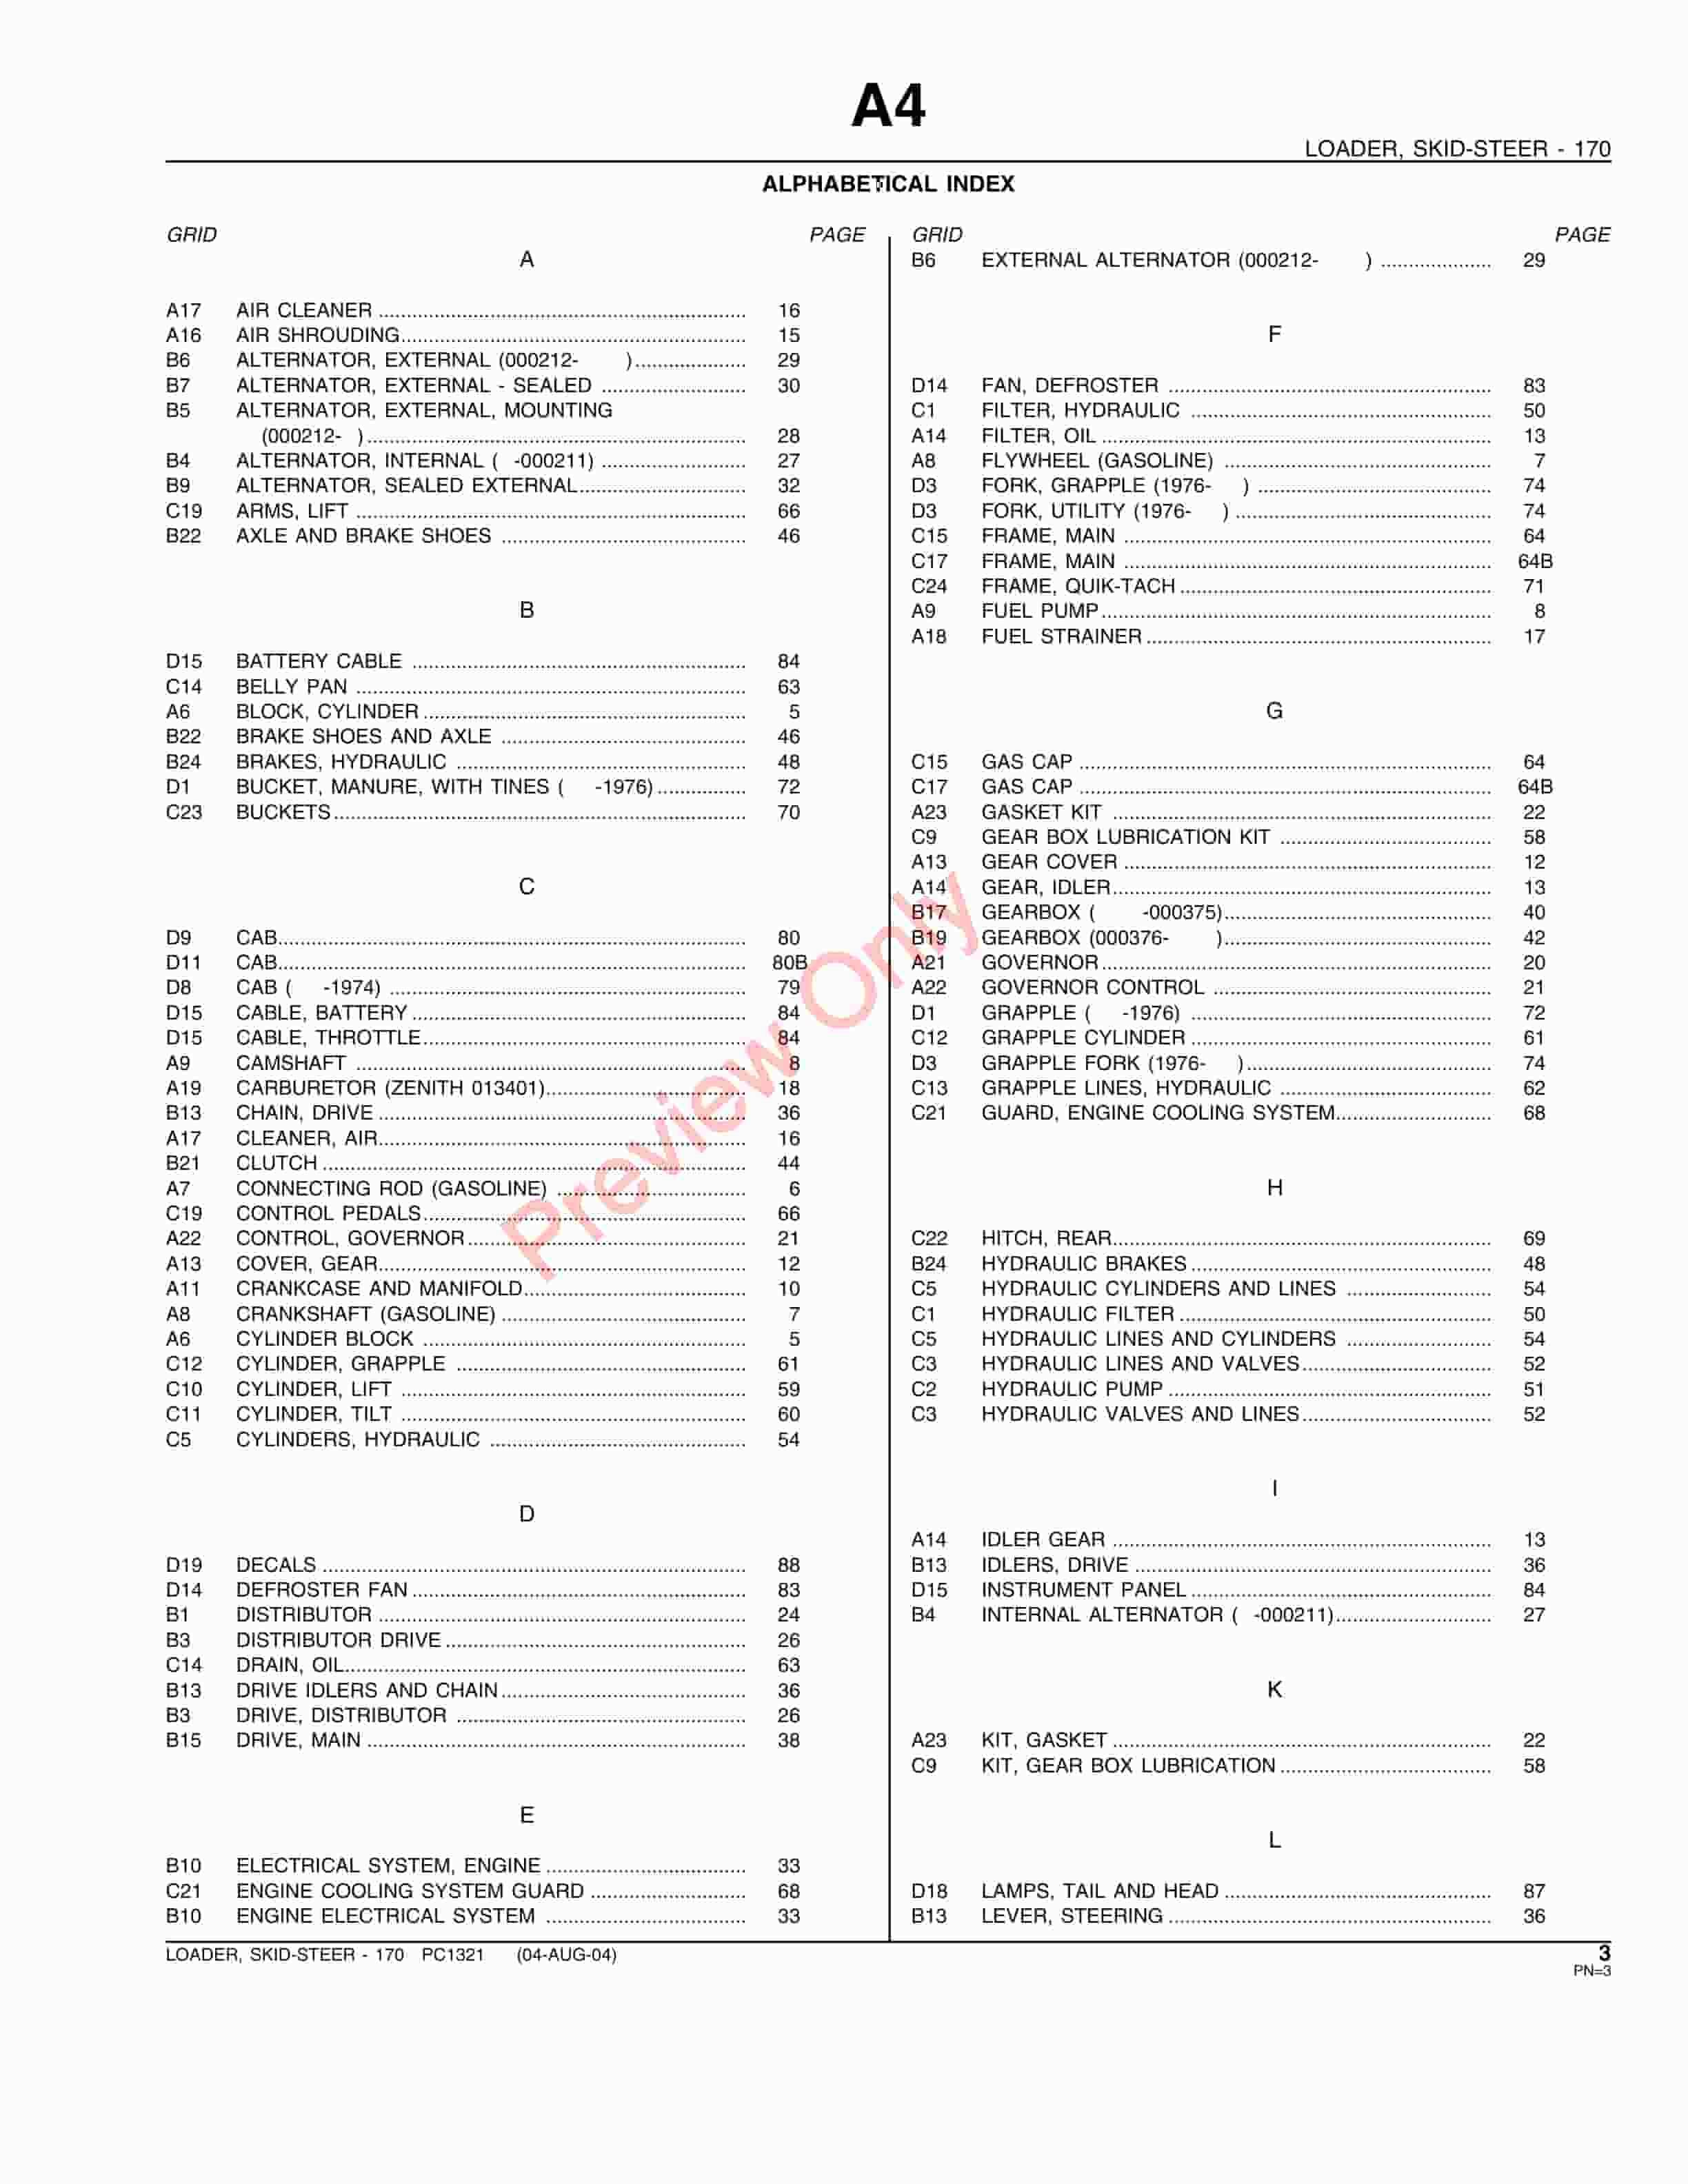 John Deere 170 Skid Steer Loader Parts Catalog PC1321 04AUG04-5